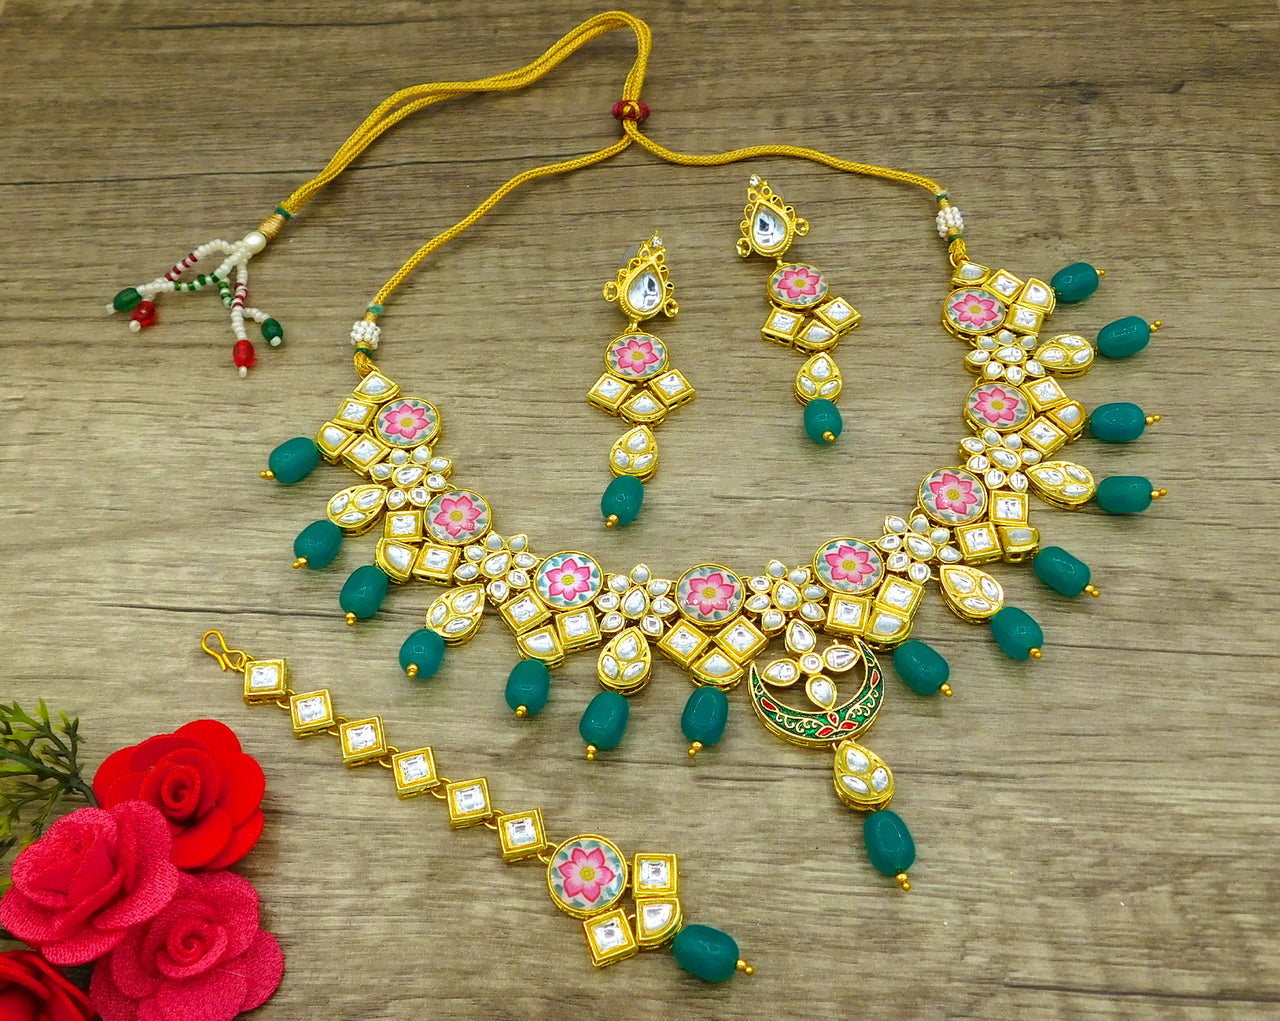 Sujwel Kundan and Painting with Floral Design Chokar Necklace Set (08-0282) - Sujwel